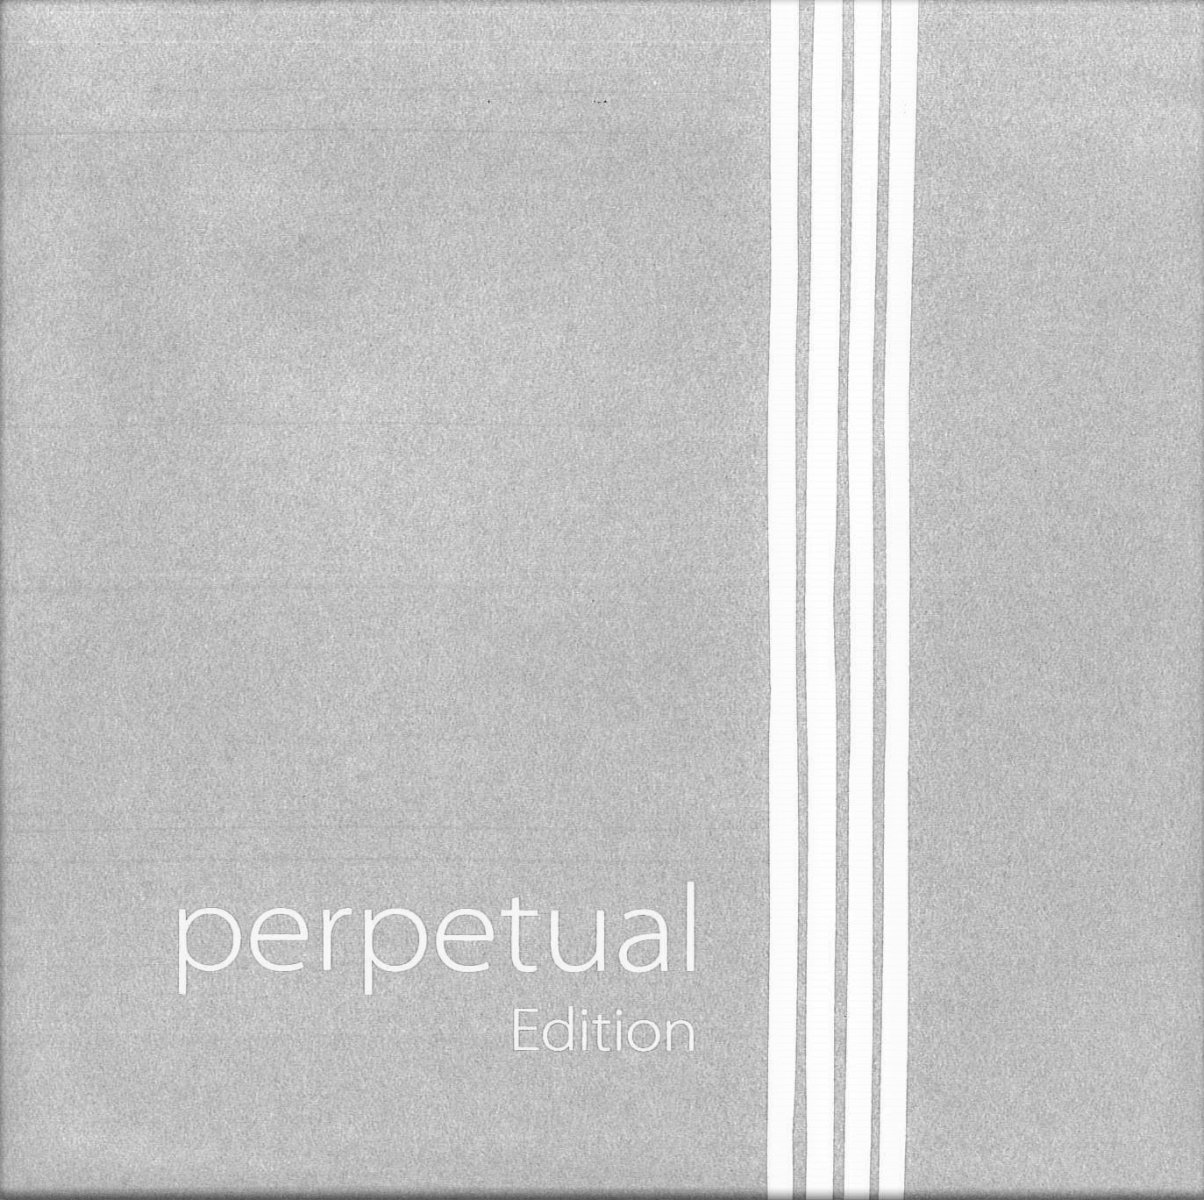 Perpetual】-Pirastro- - I Love Strings. | 国内最大級クラシック弦の通販